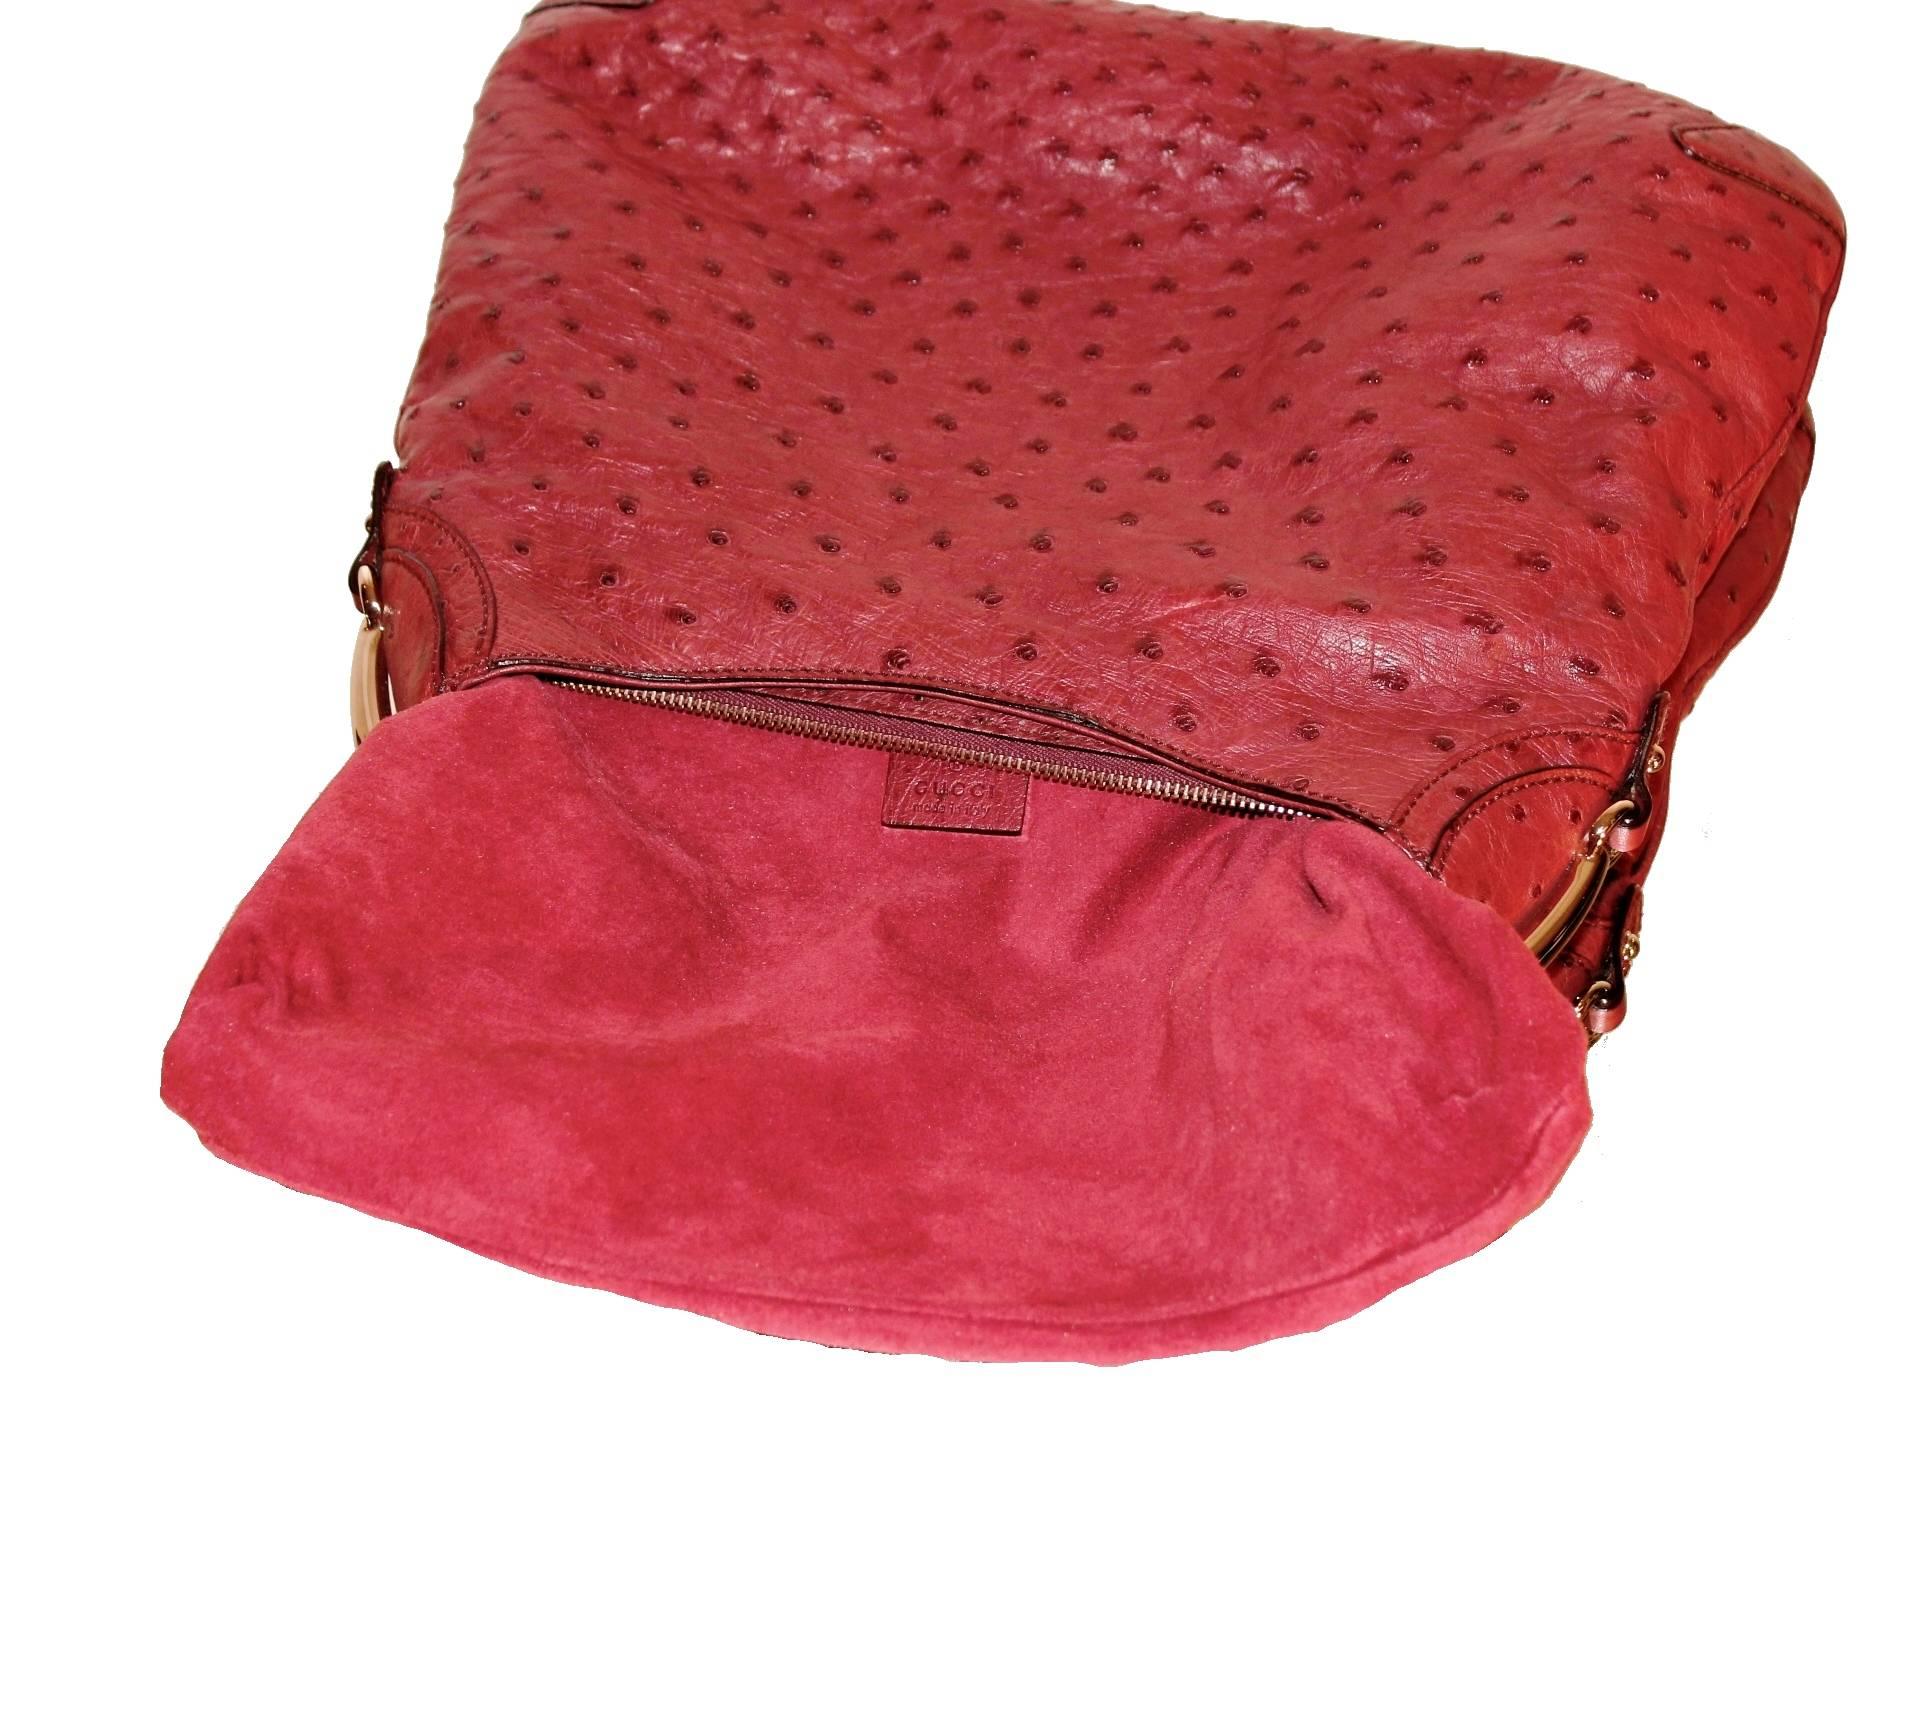 Stunning Gucci Ostrich Skin Horsebit Detail Shoulder Bag 1